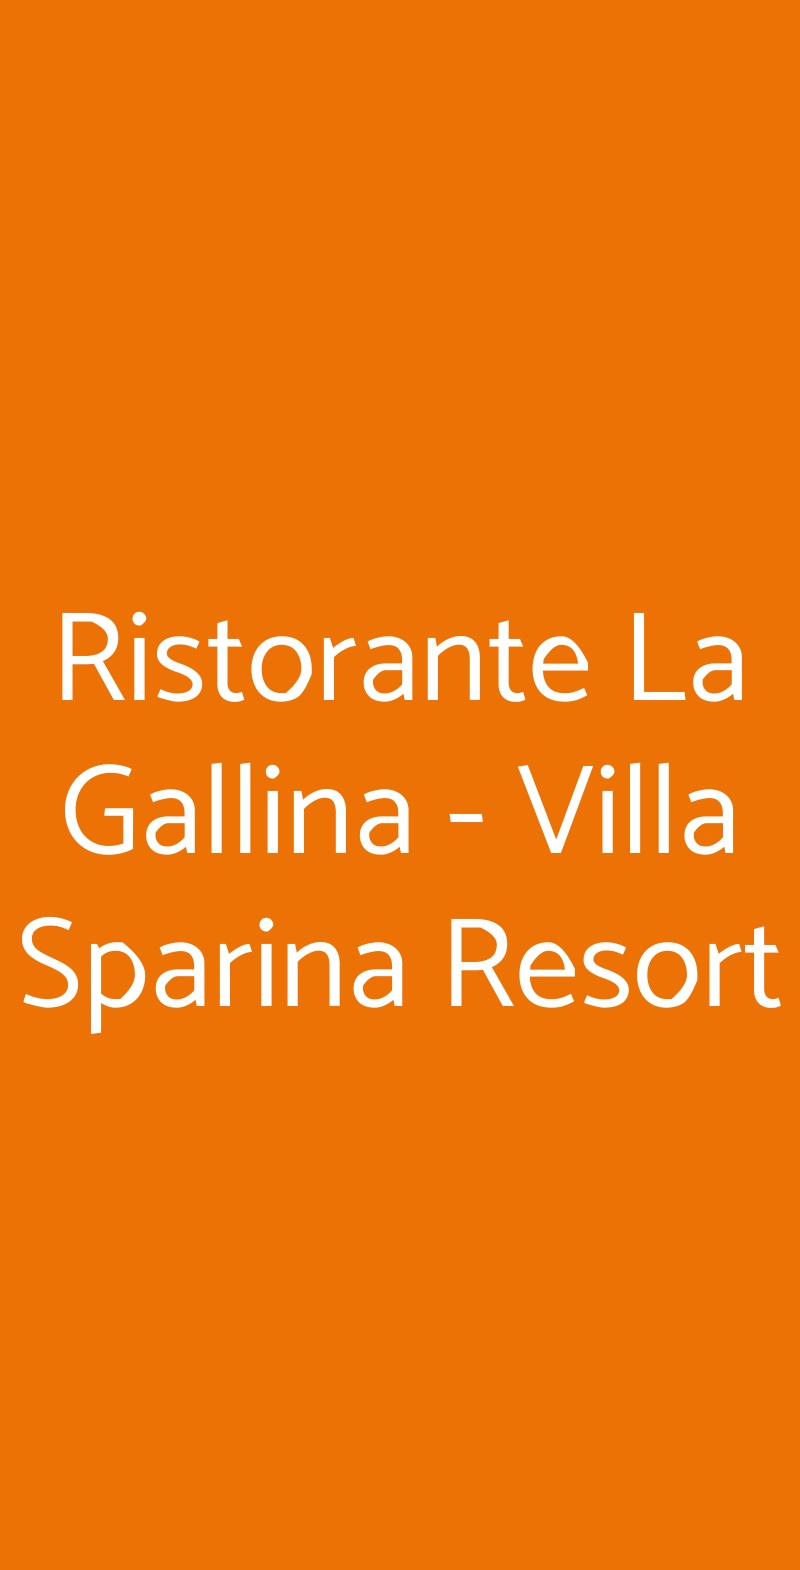 Ristorante La Gallina - Villa Sparina Resort Gavi menù 1 pagina